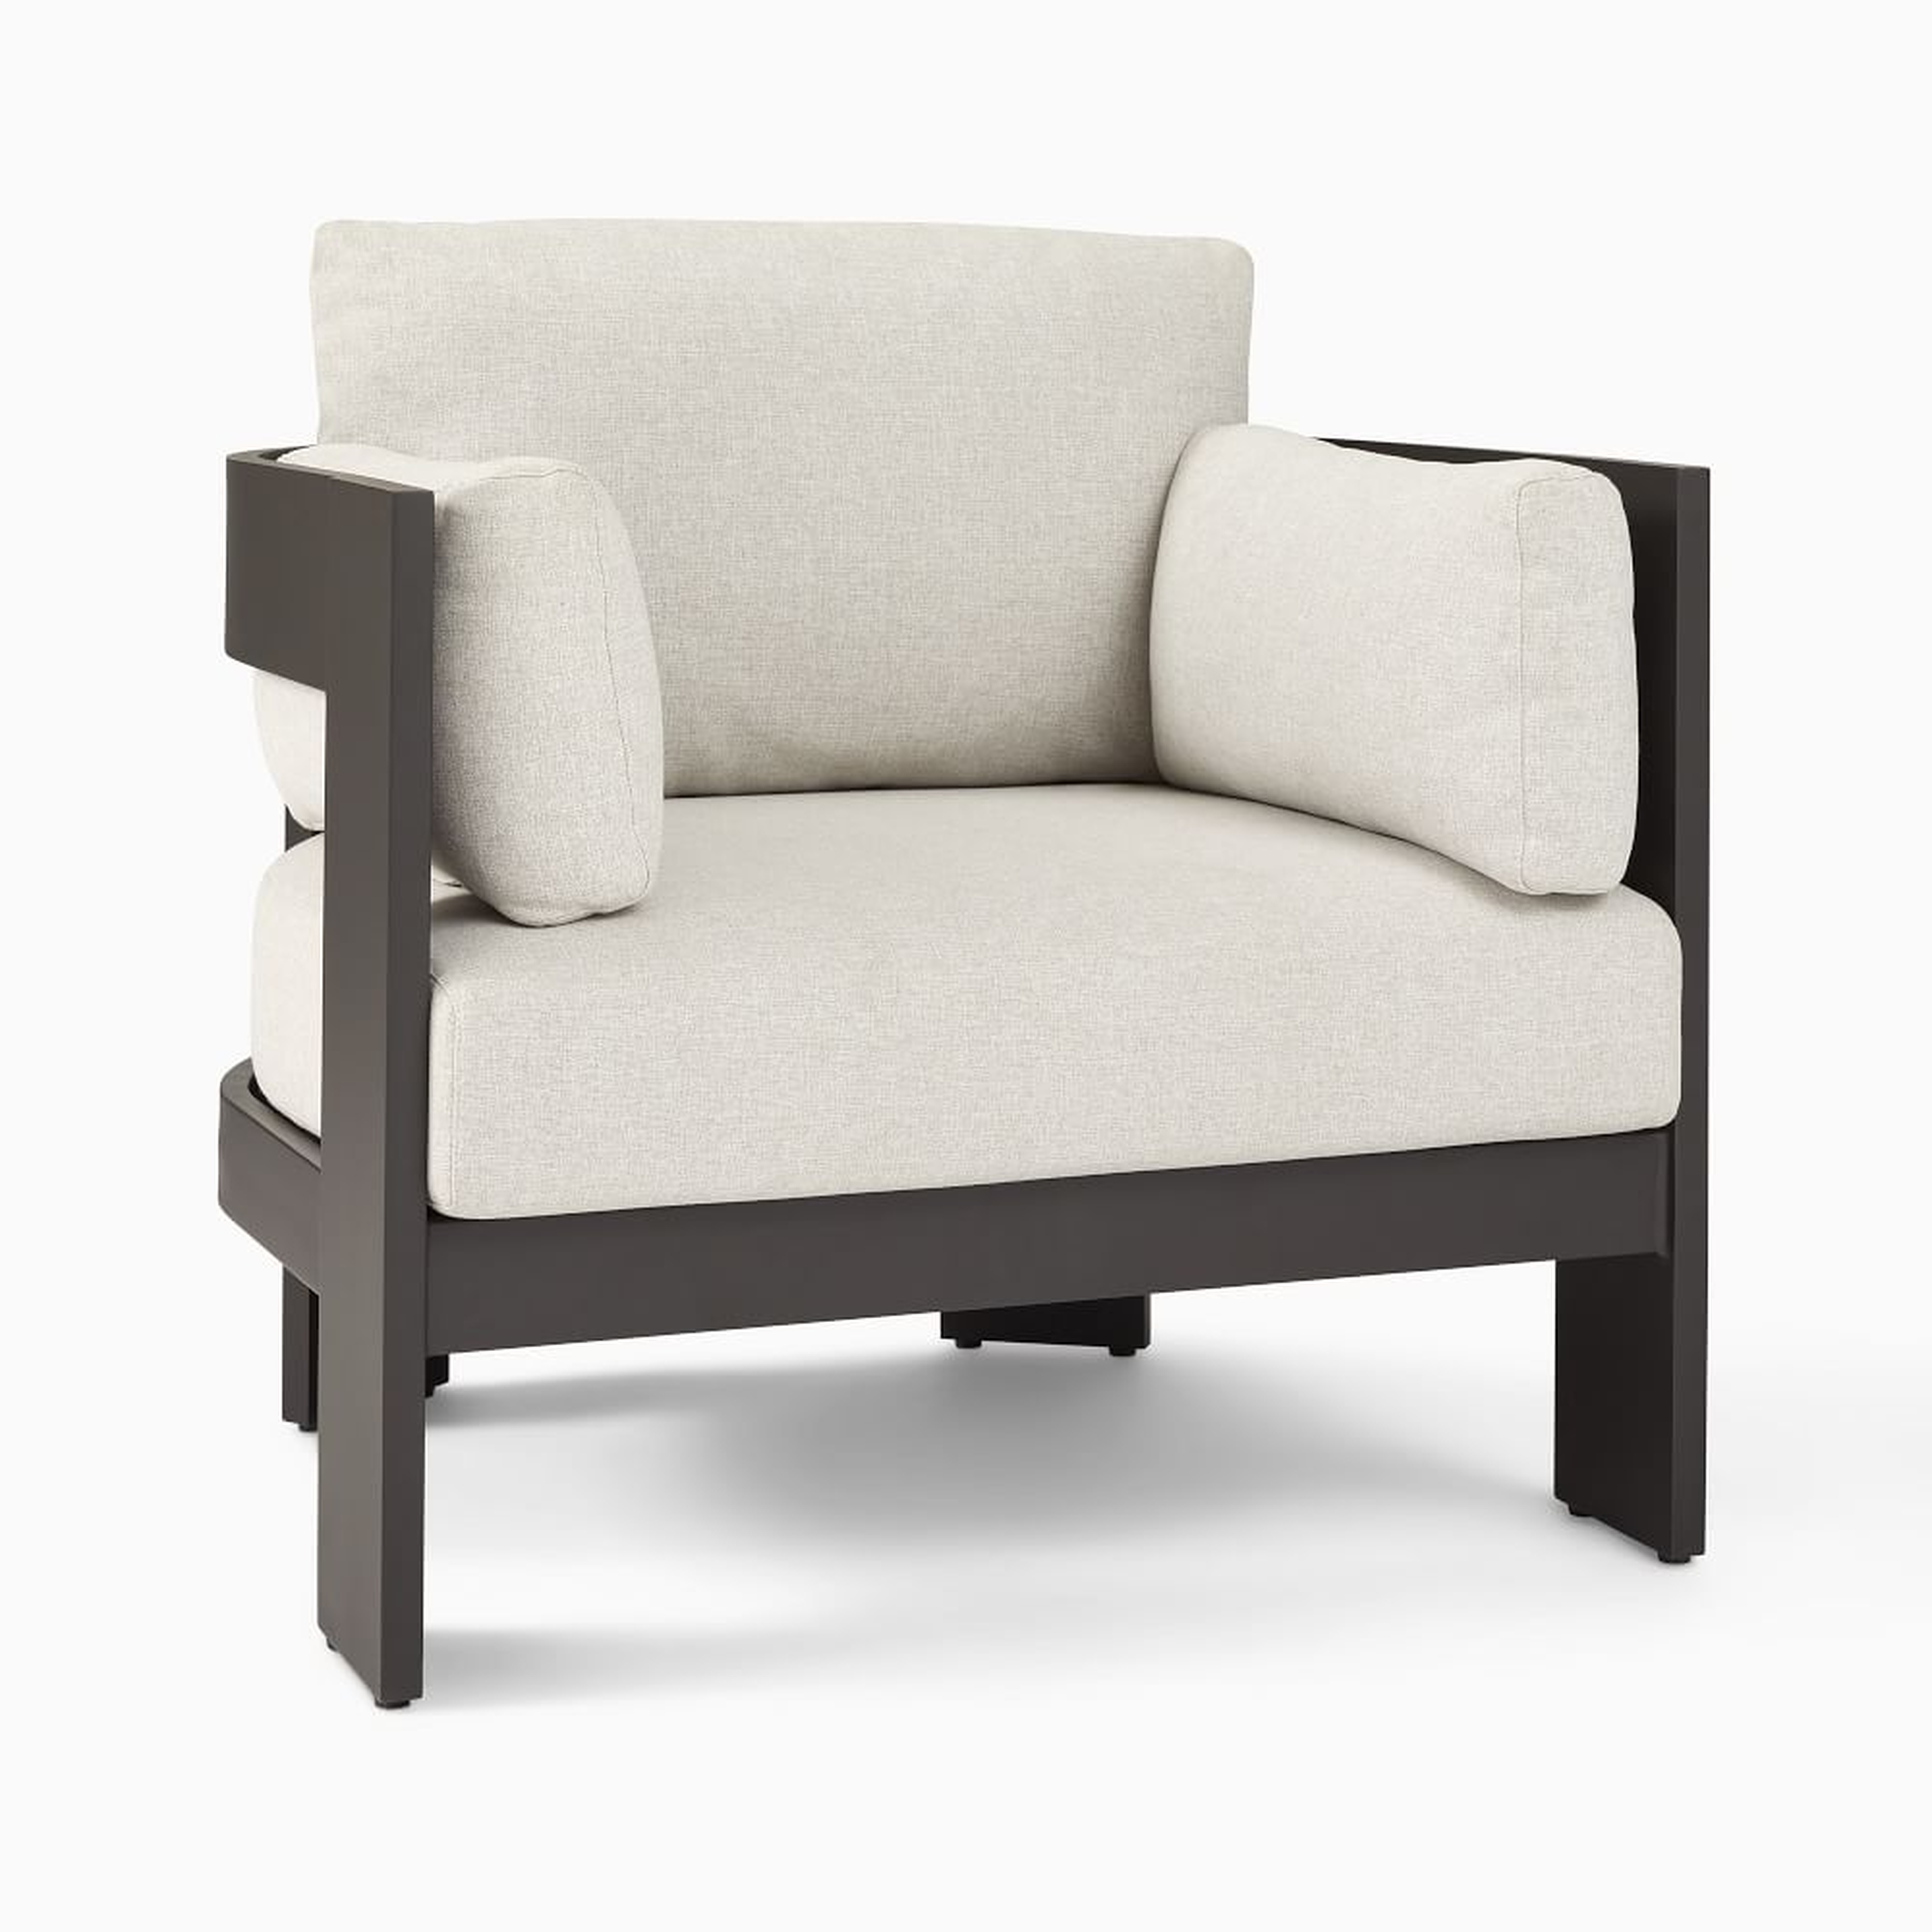 Caldera Aluminum Outdoor Lounge Chair, Dark Bronze - West Elm